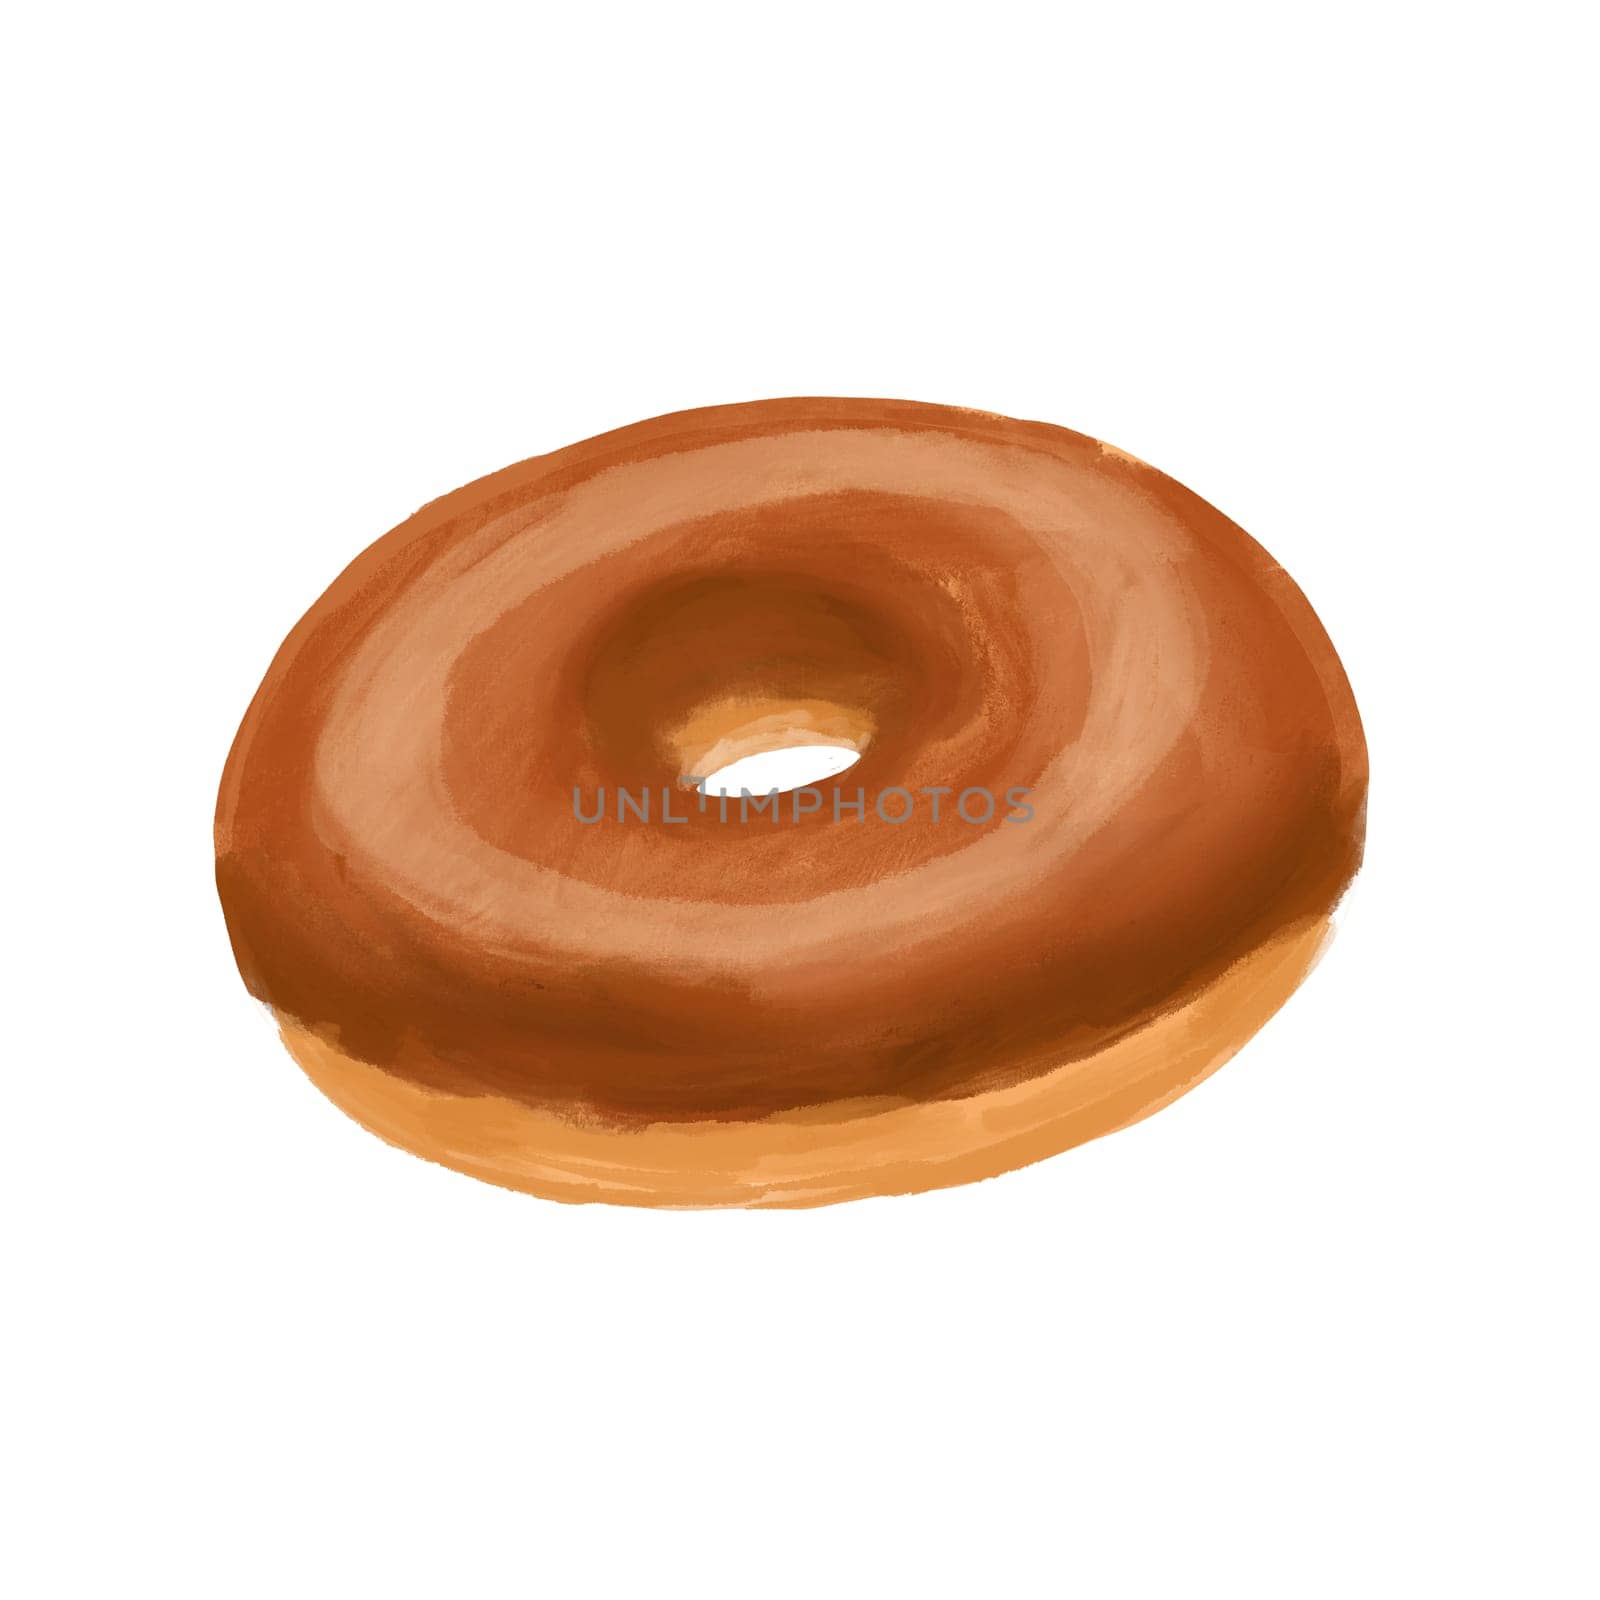 Hand drawn donut isolated on white background. Food illustration isolated on white. by ElenaPlatova